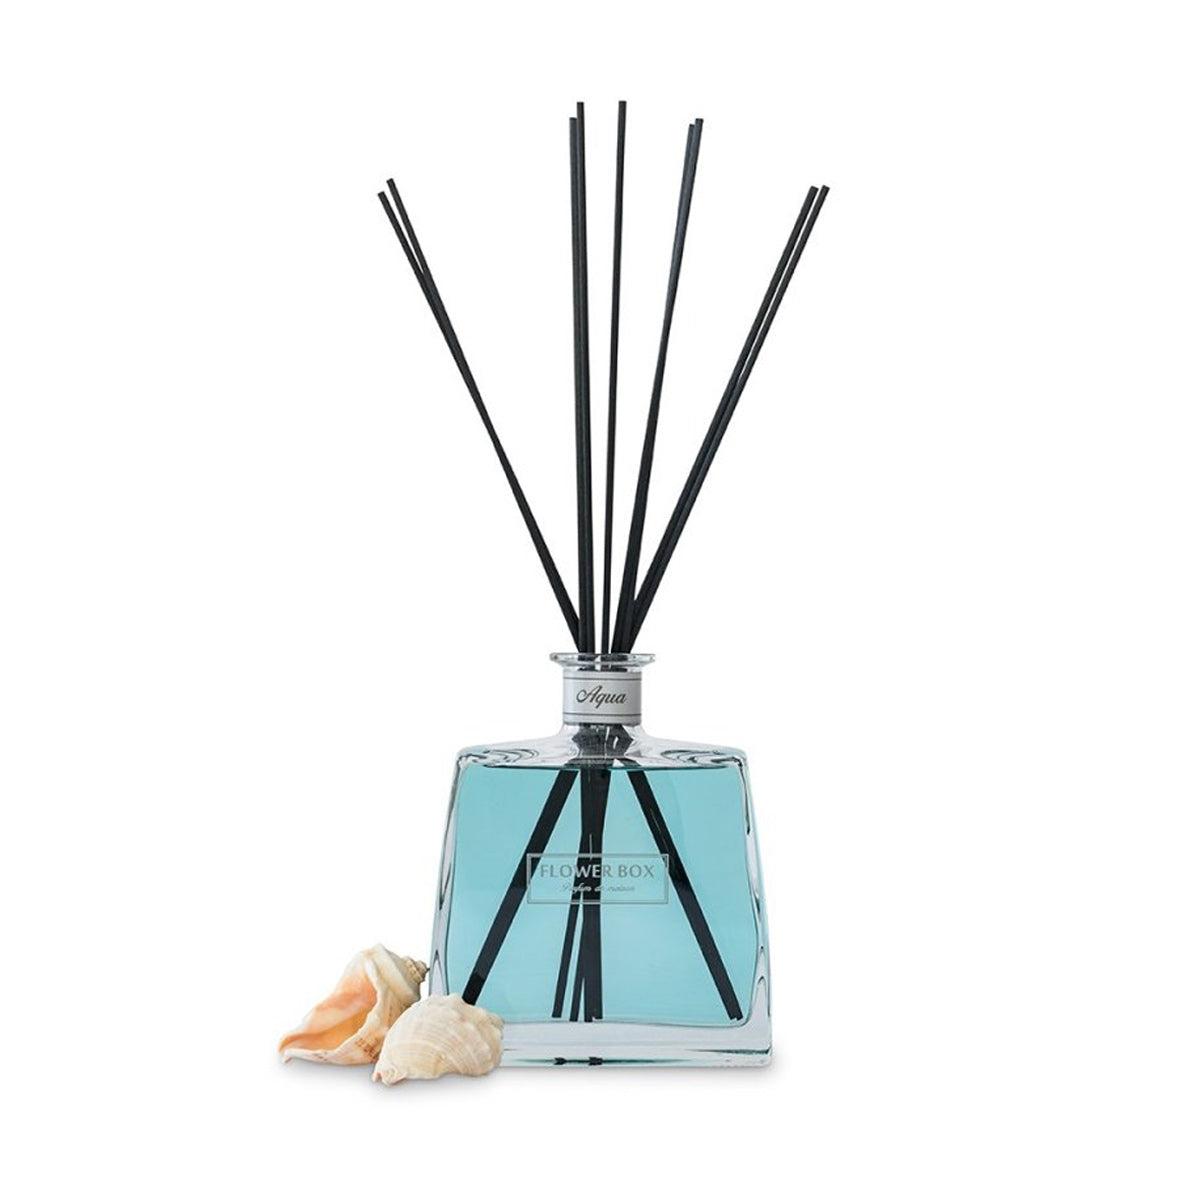 Aqua Hallmark Diffuser 700mL-Candles & Fragrance-Flower Box-The Bay Room